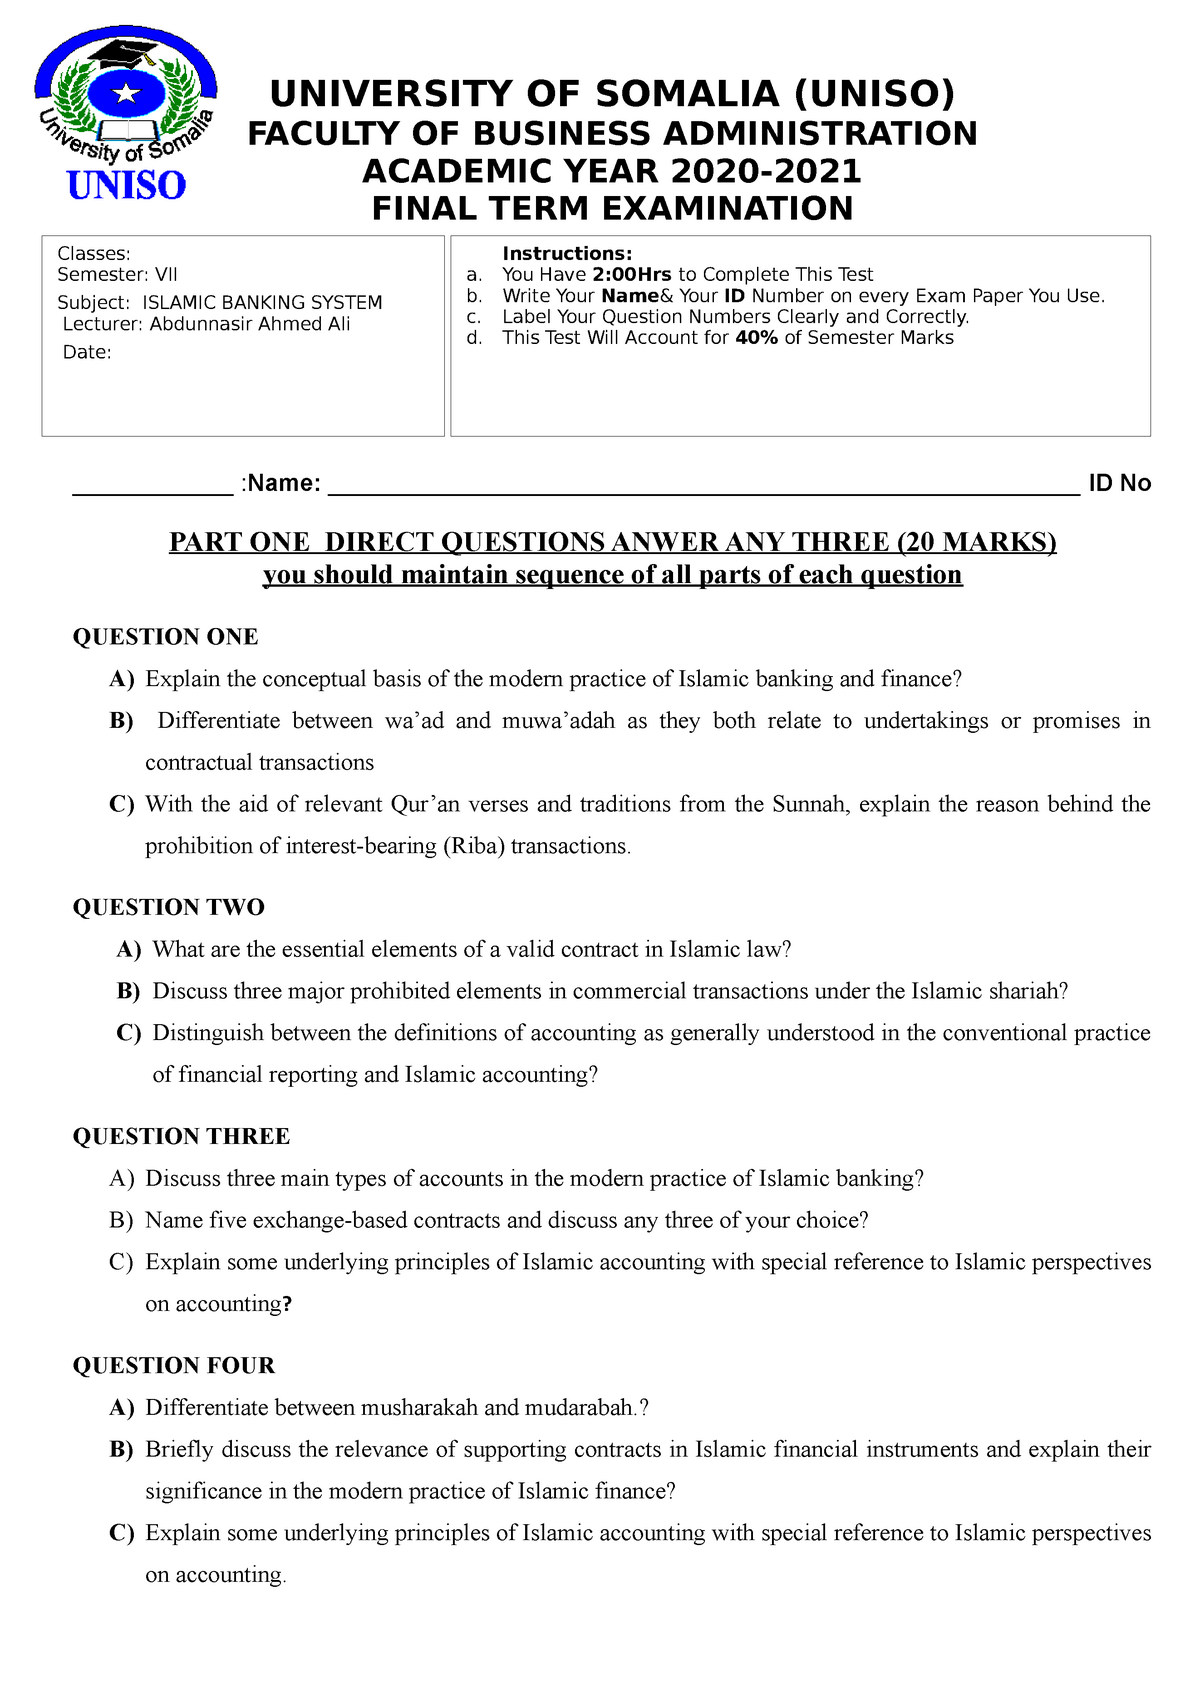 Islamic abnk midterm exam - UNIVERSITY OF SOMALIA (UNISO) FACULTY For islamic loan agreement template